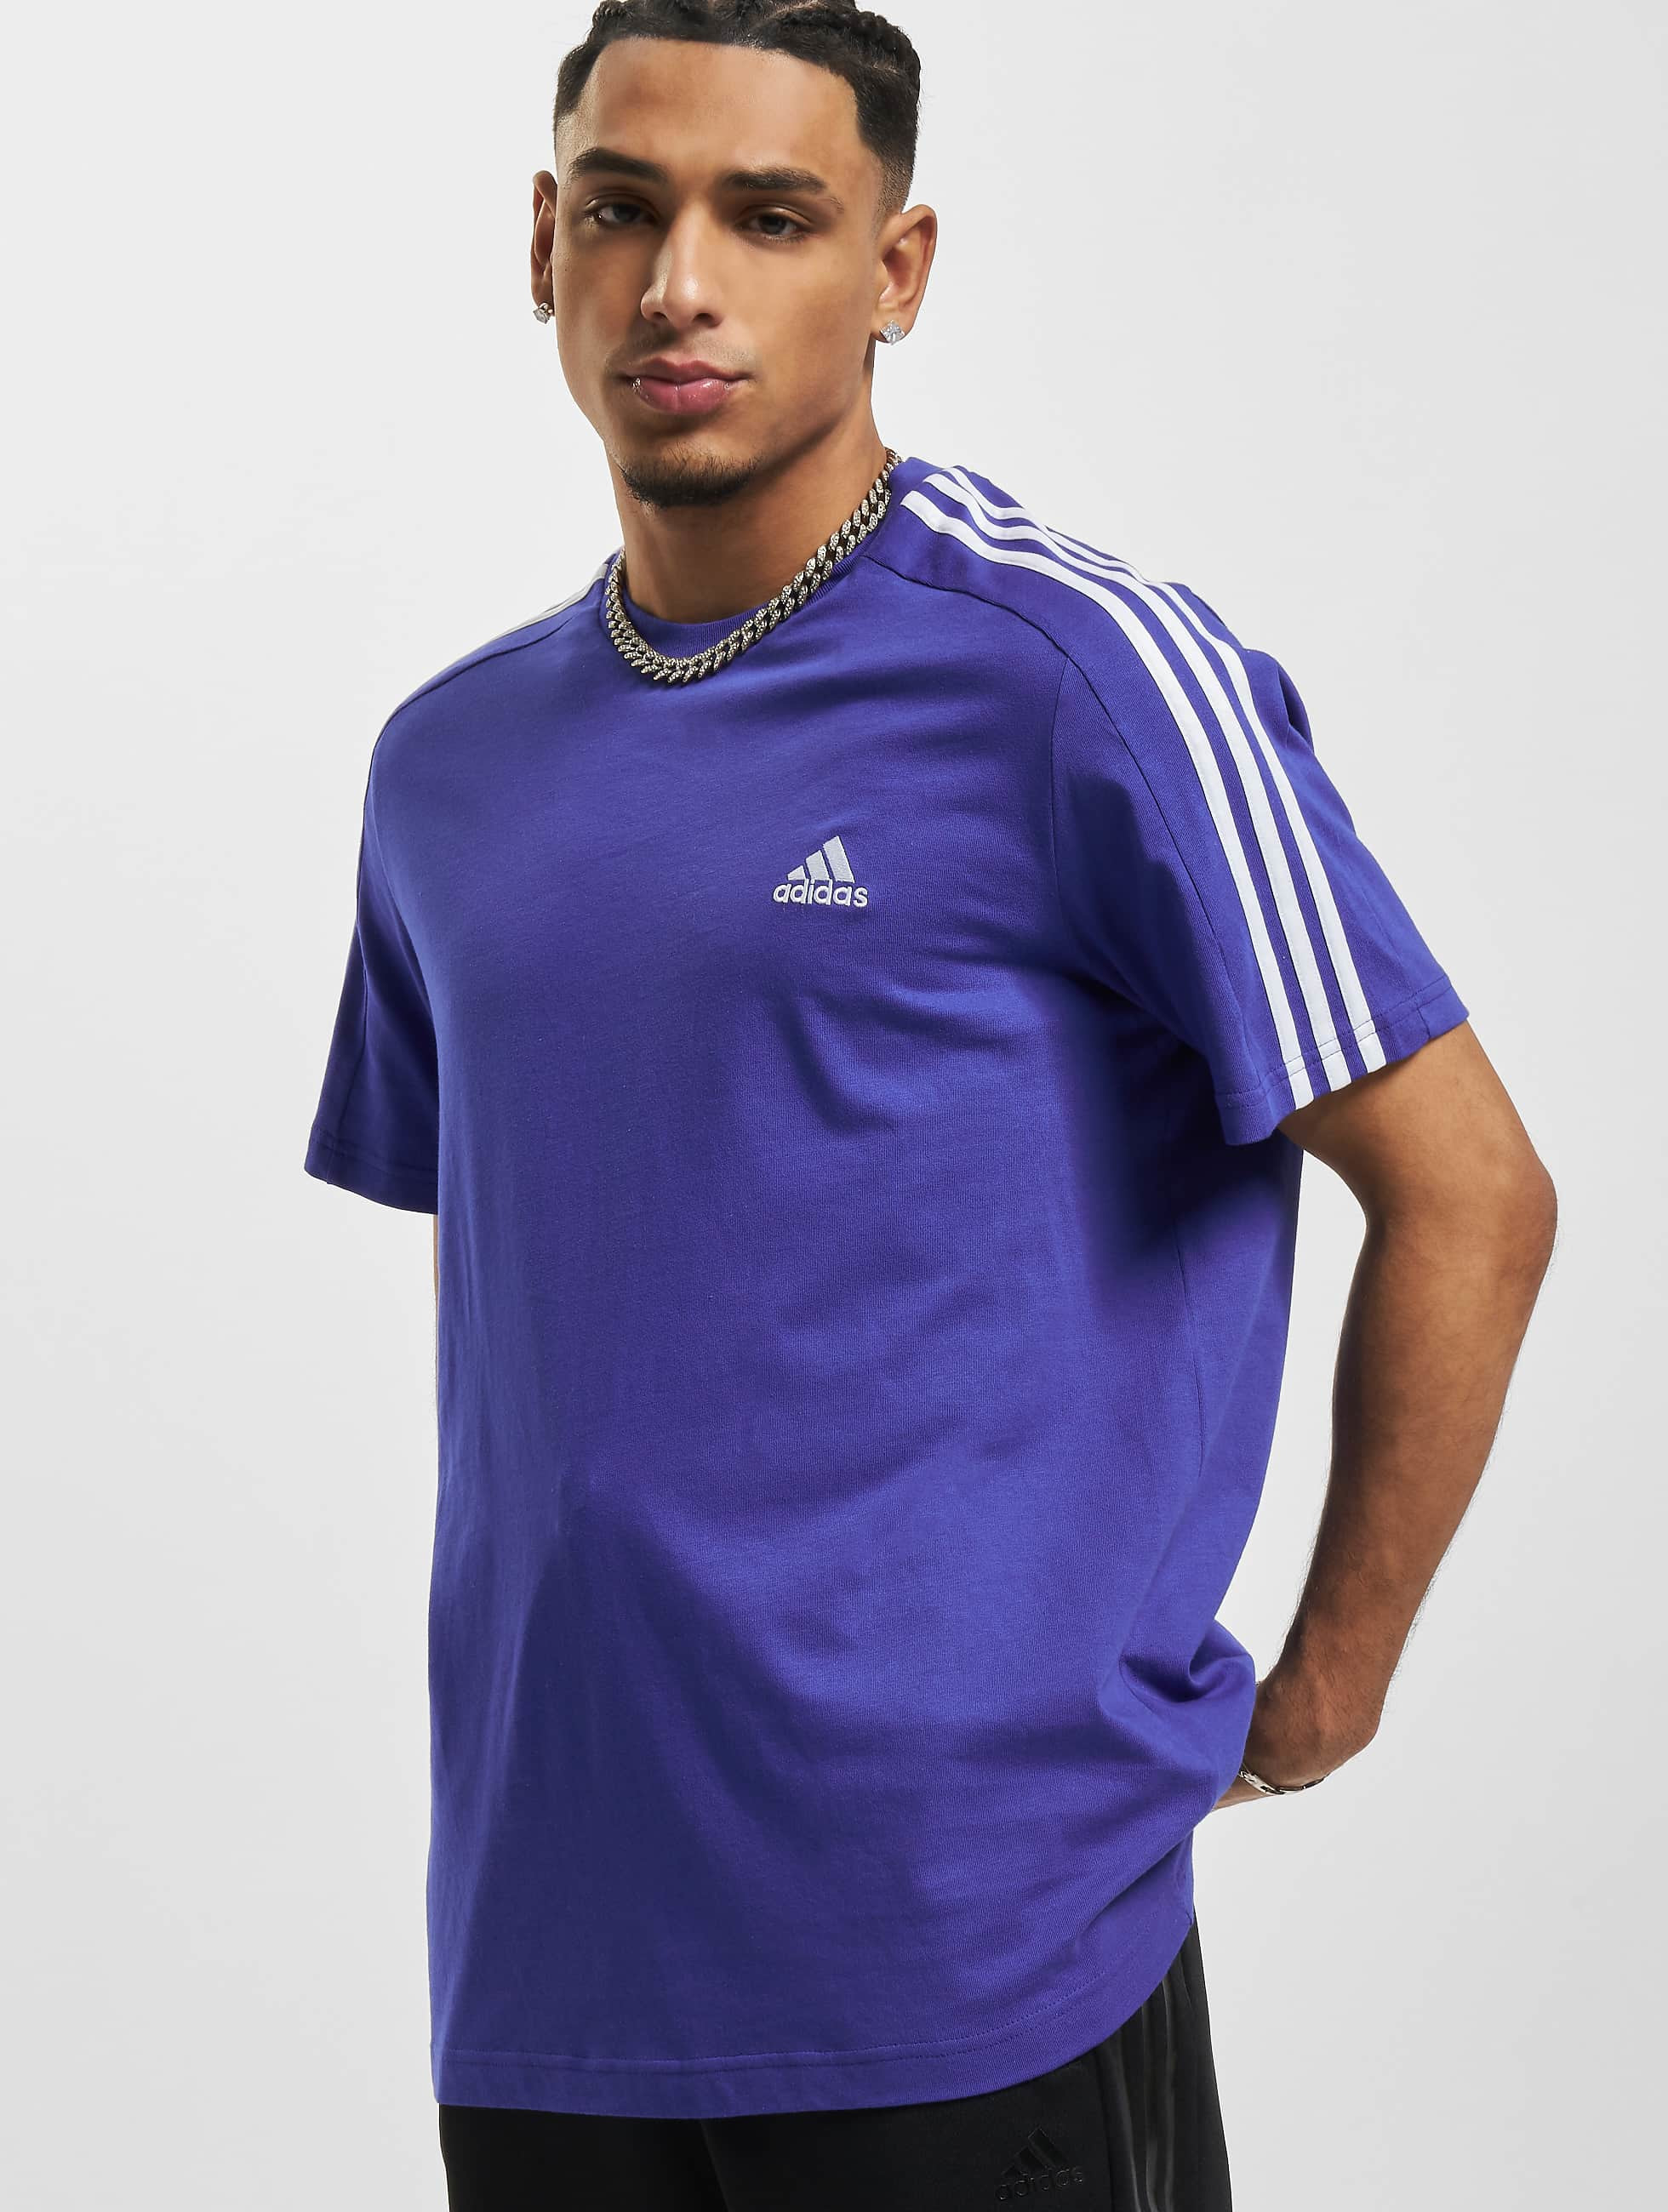 adidas Originals bovenstuk / t-shirt 3 Stripes in blauw 996246